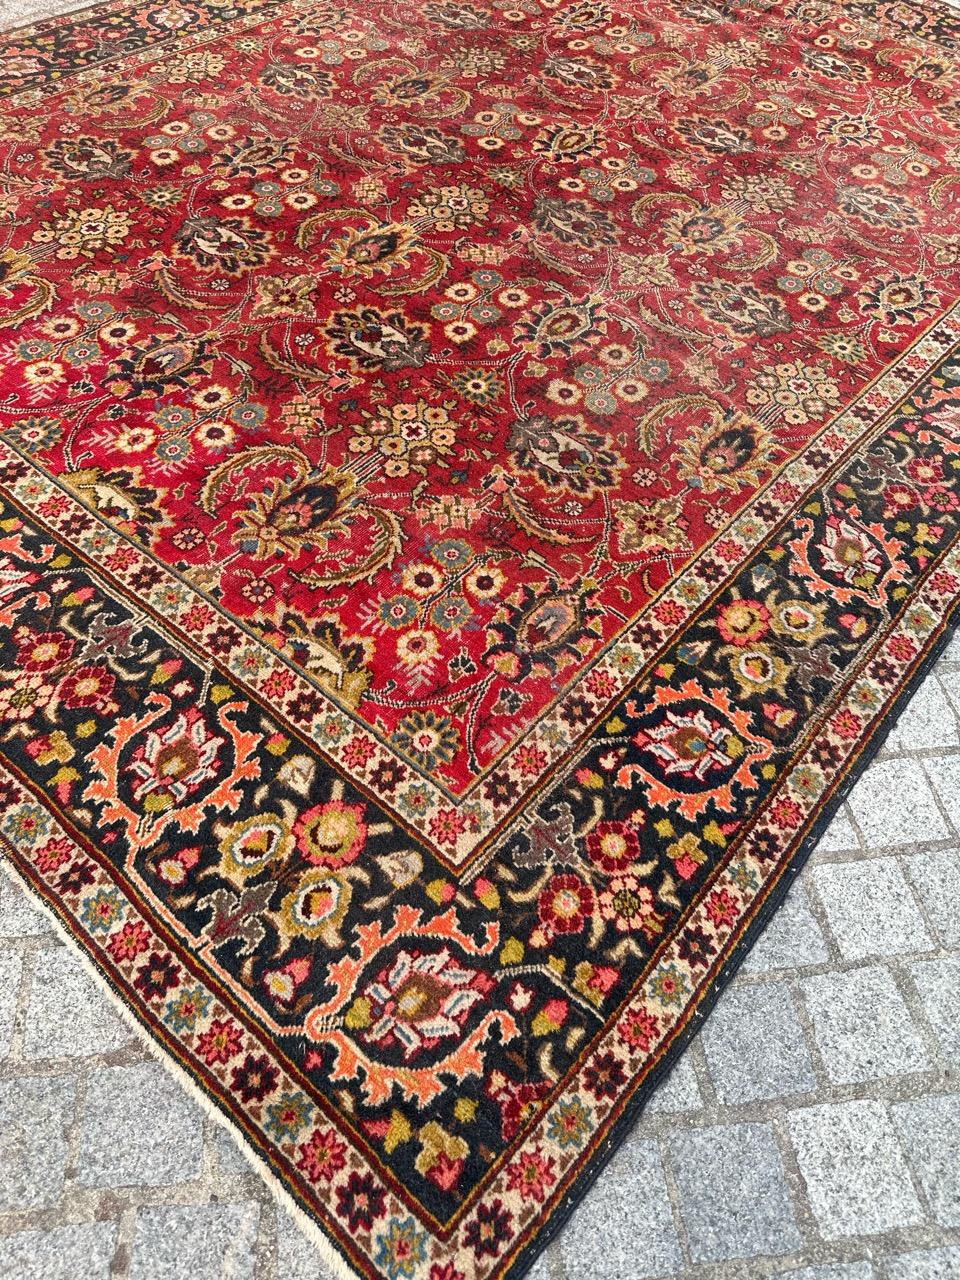 Bobyrug’s Nice early 20th century tabriz rug For Sale 8